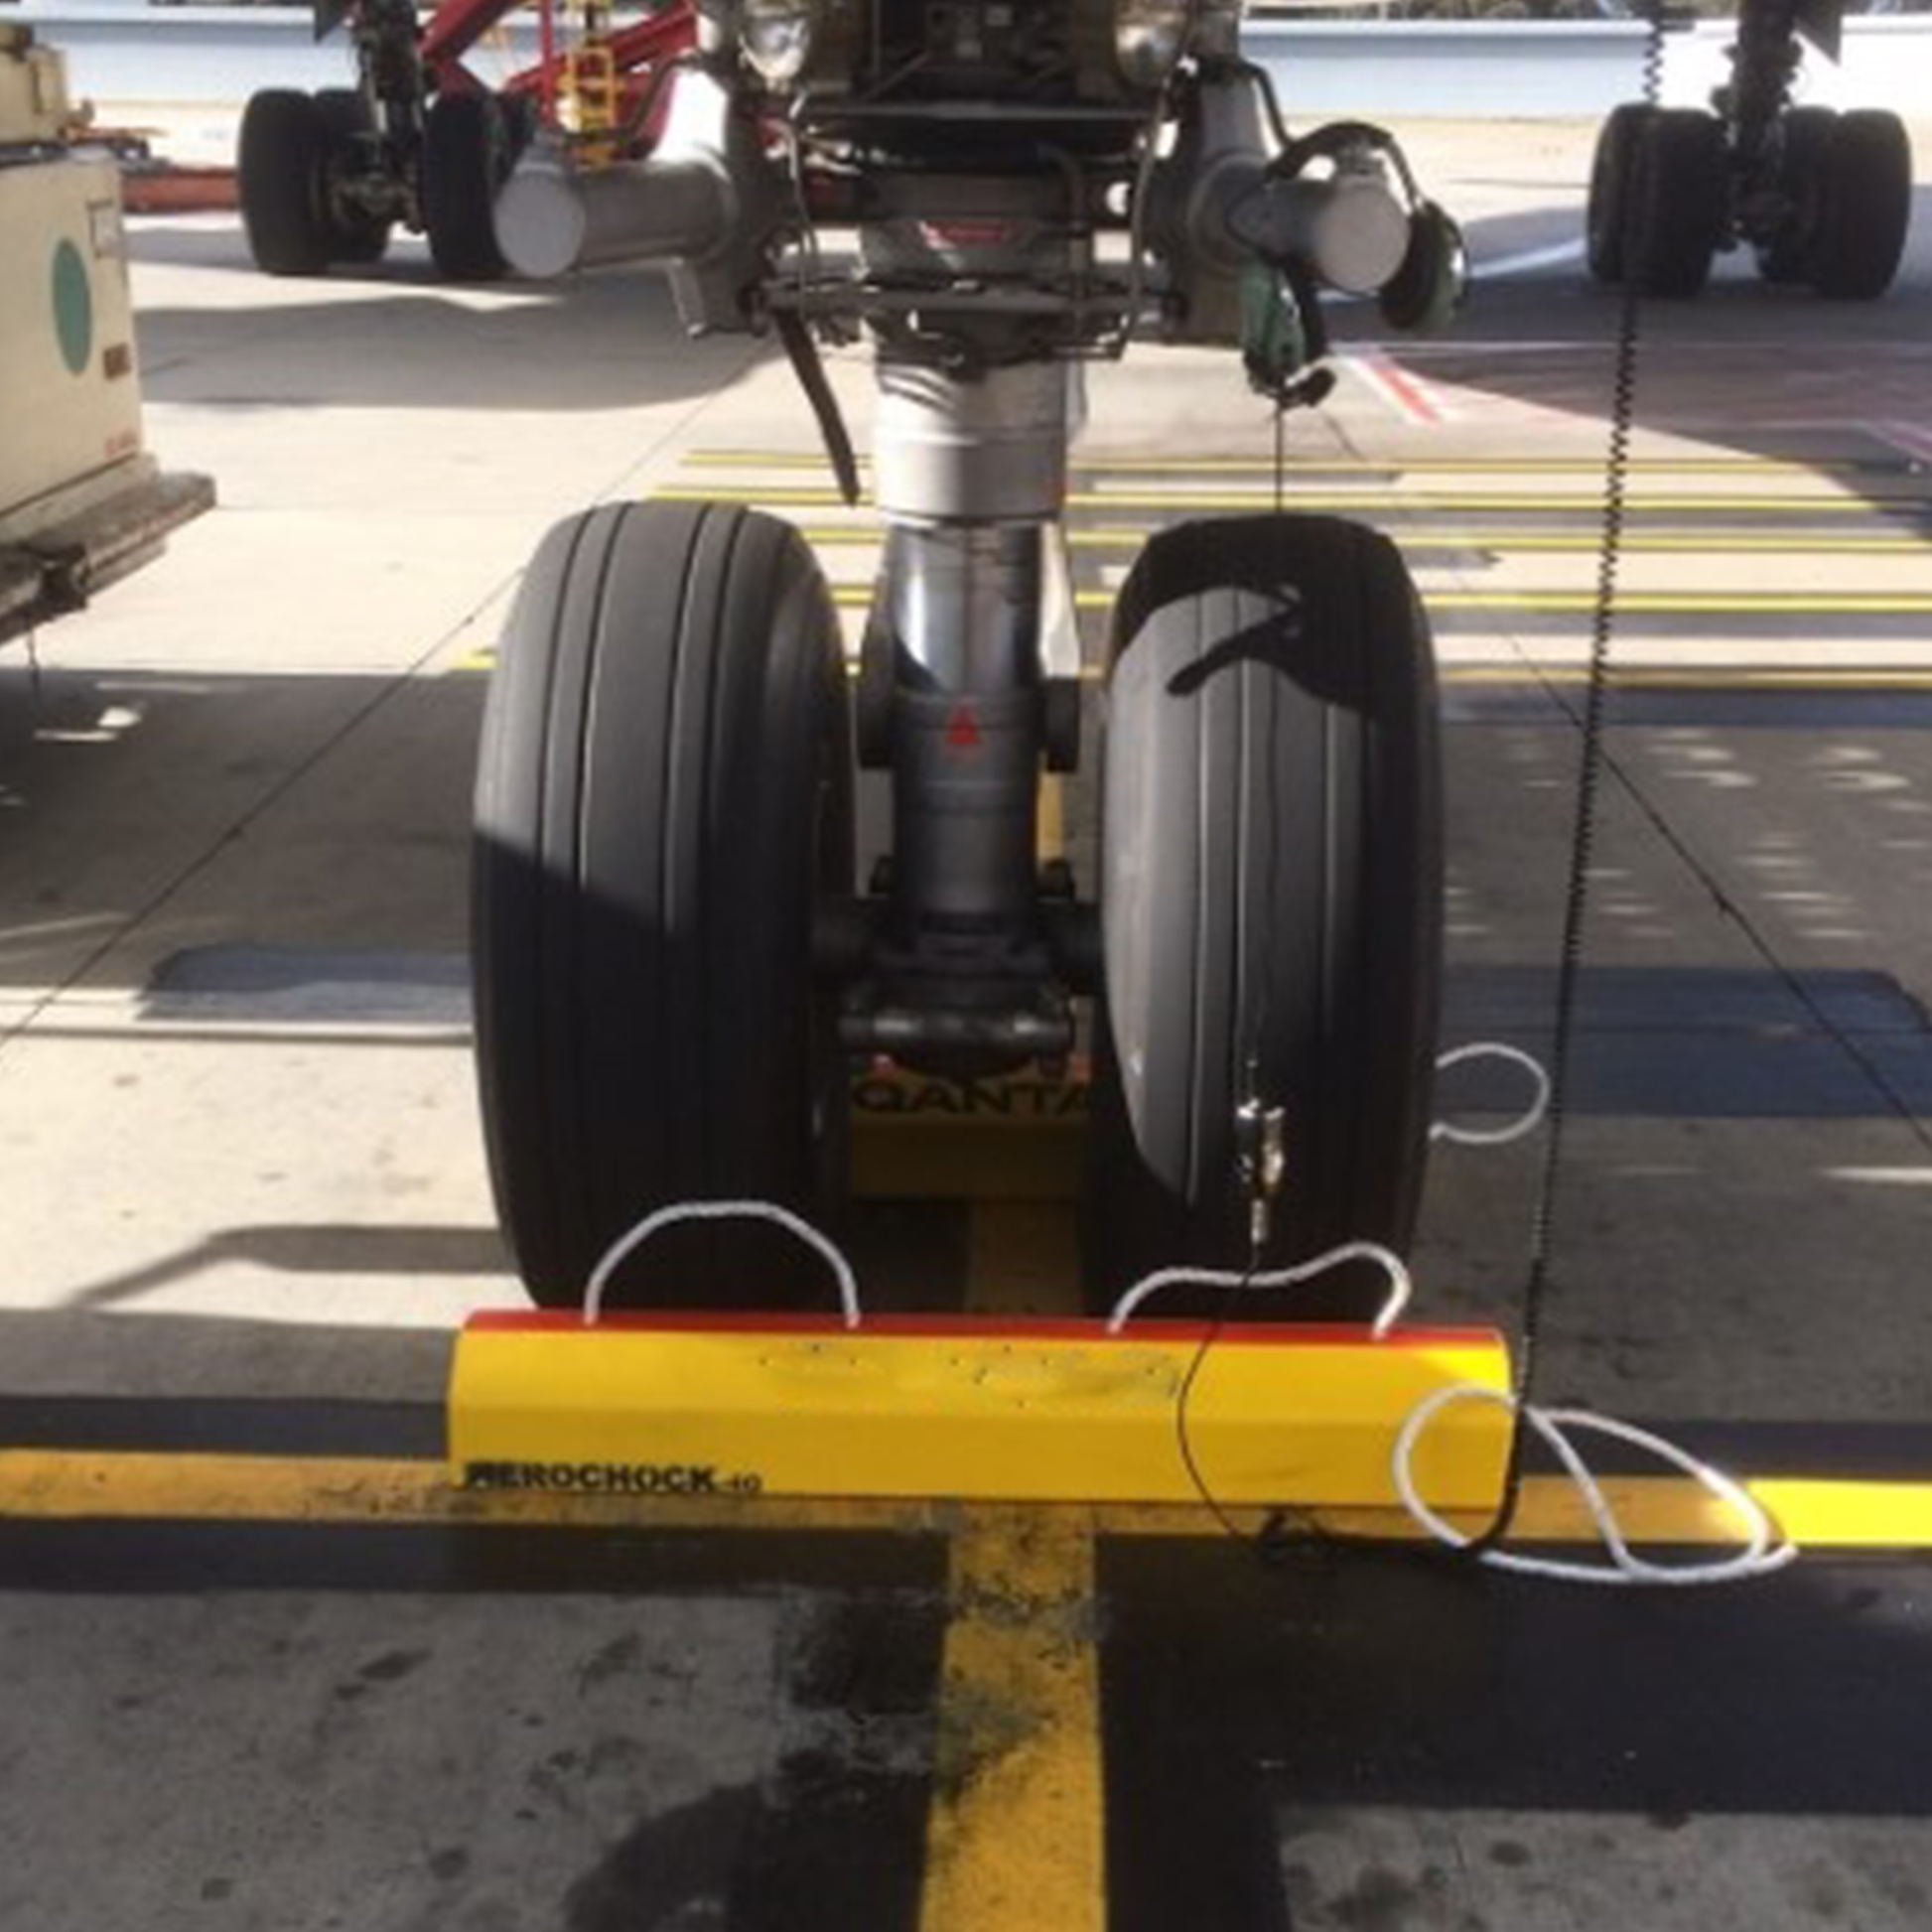 NPR07951-00 (Aerochock40 B) in use on plane wheels